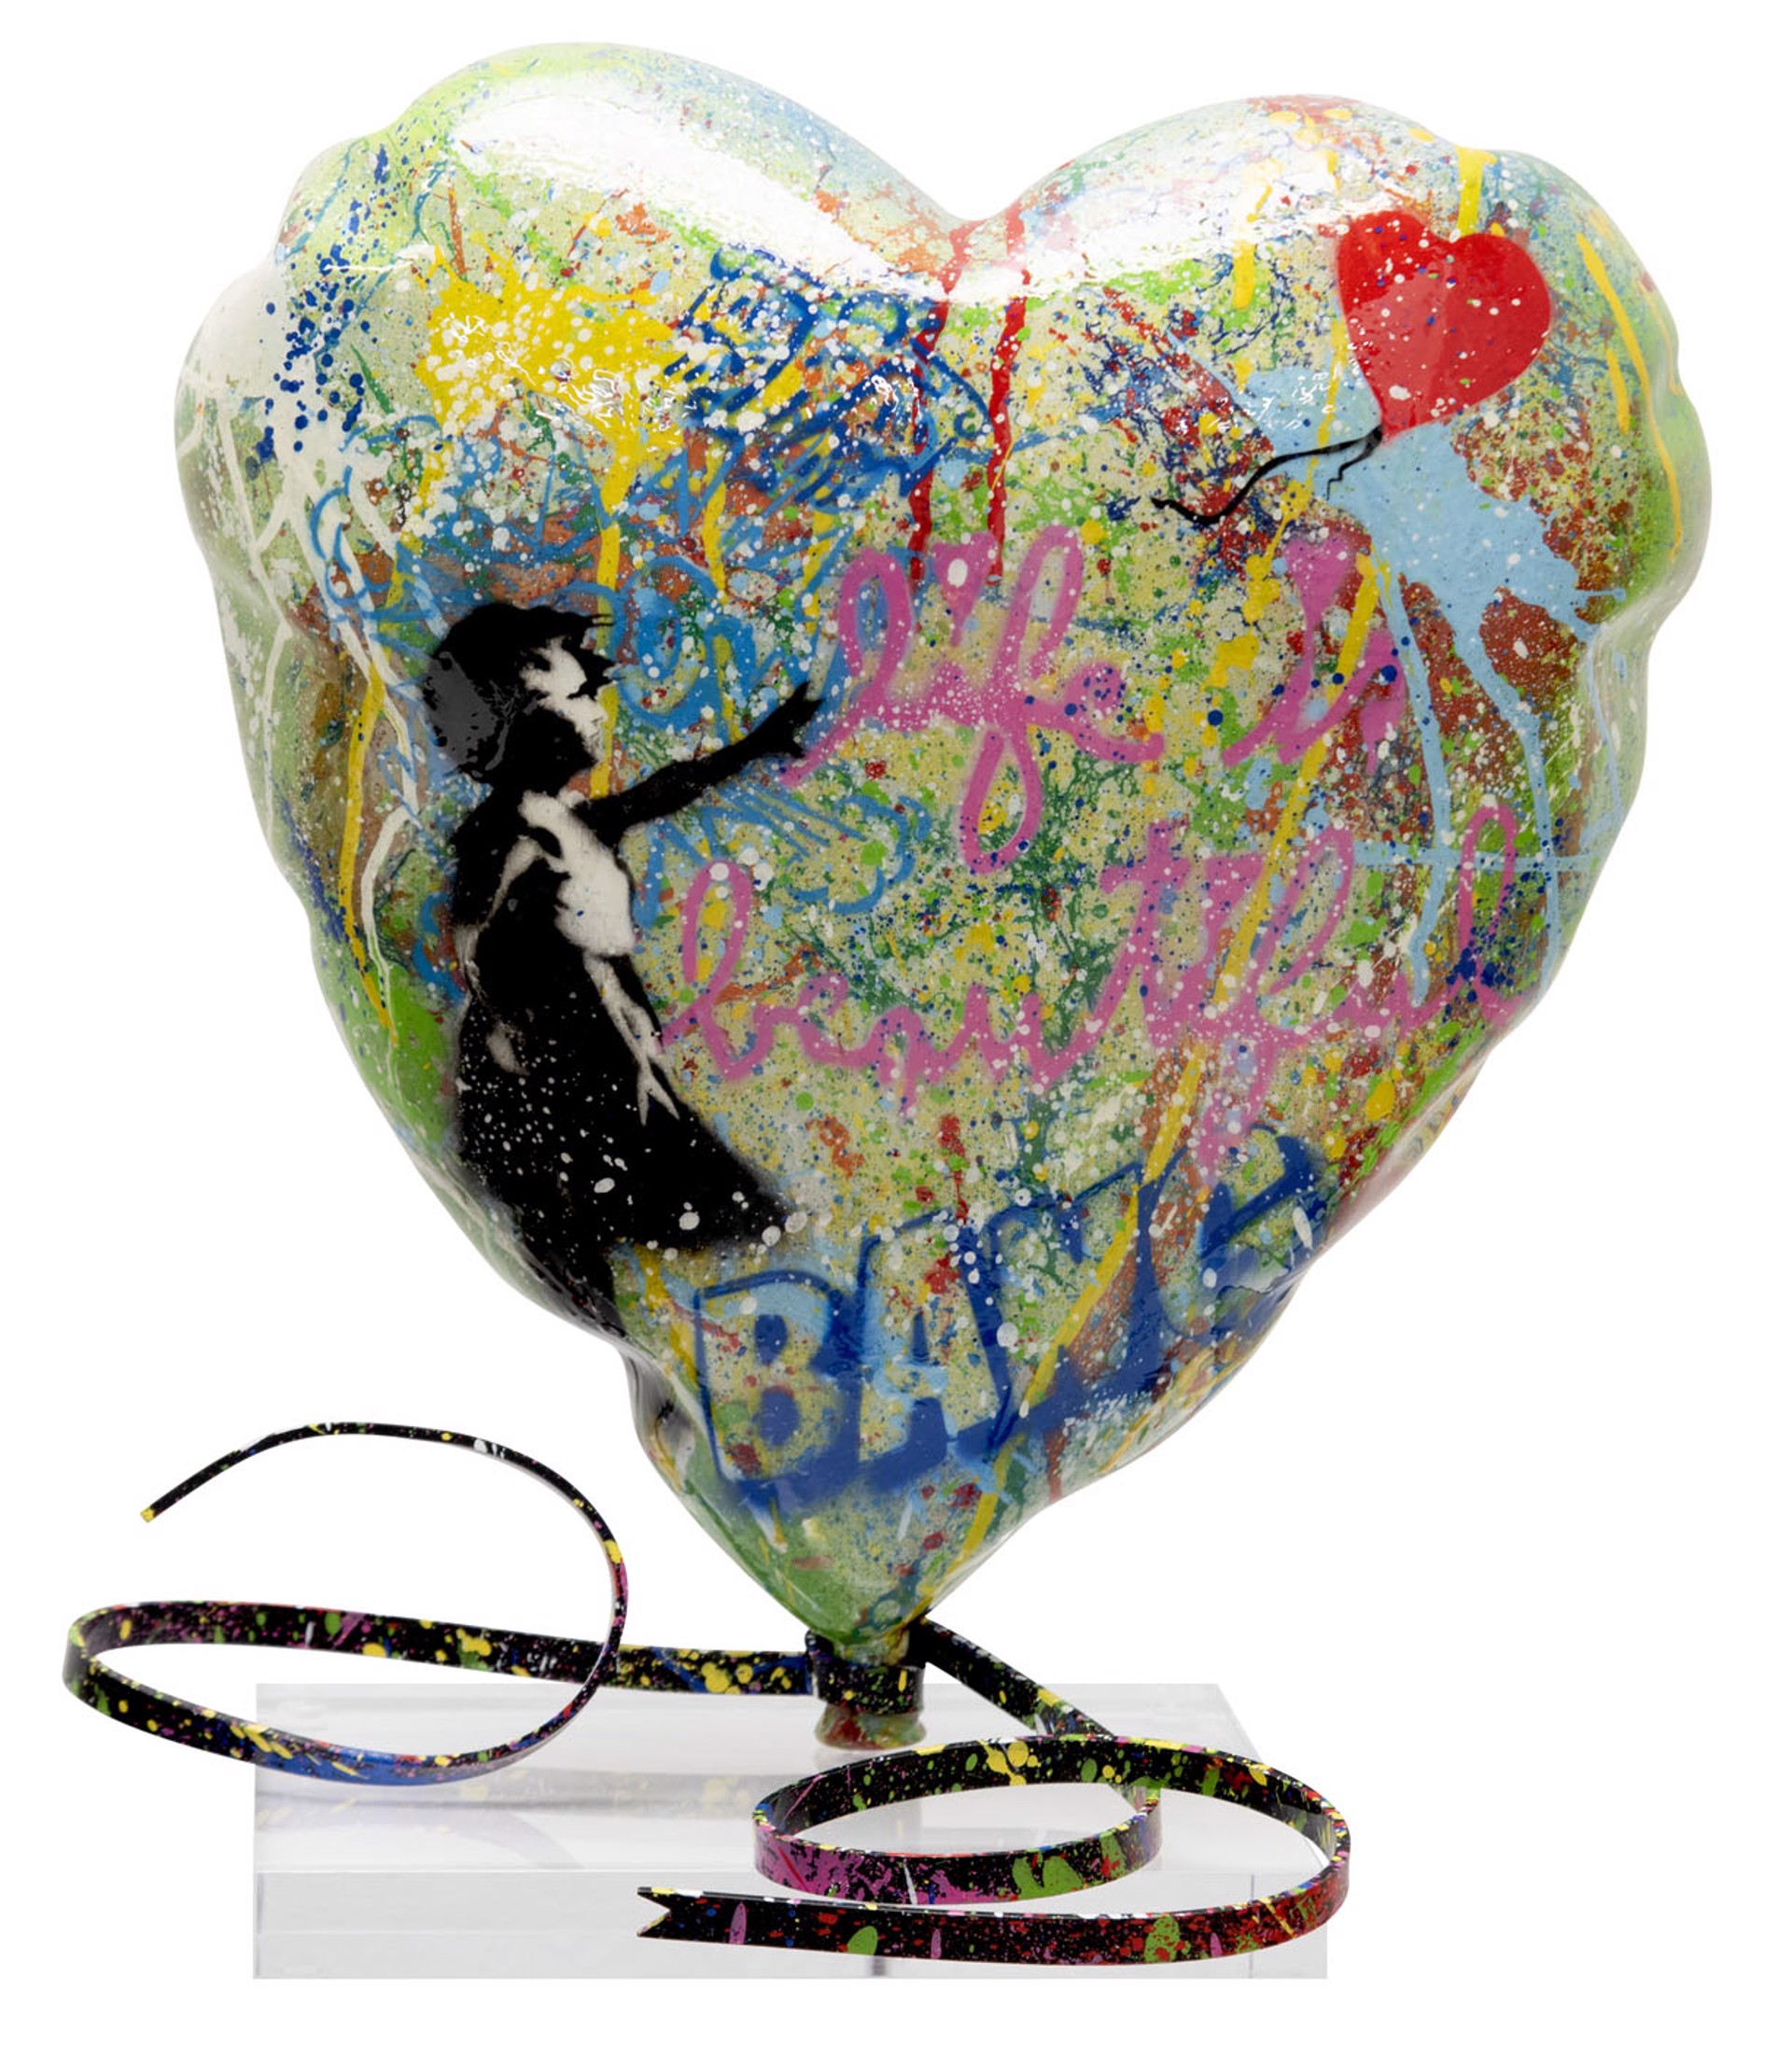 Balloon heart 1 by Mr Brainwash